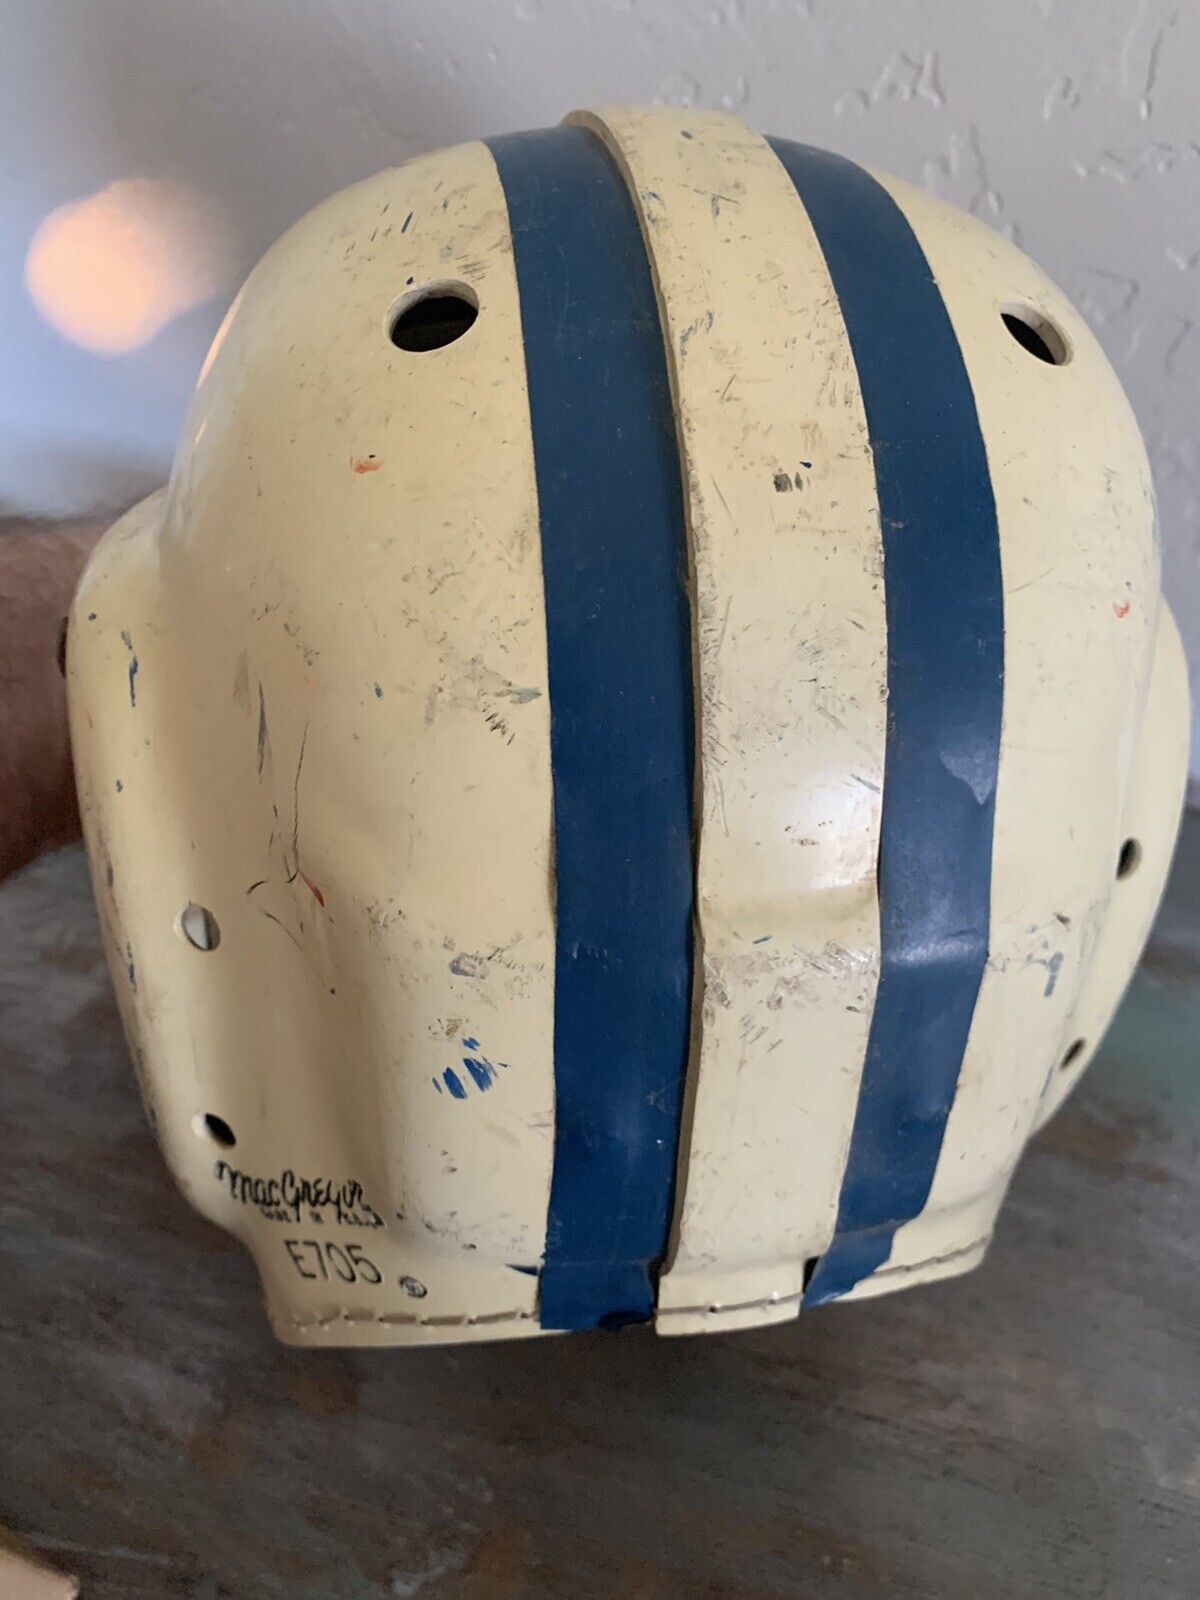 Vintage Antique MacGregor E705 Football Helmet | eBay